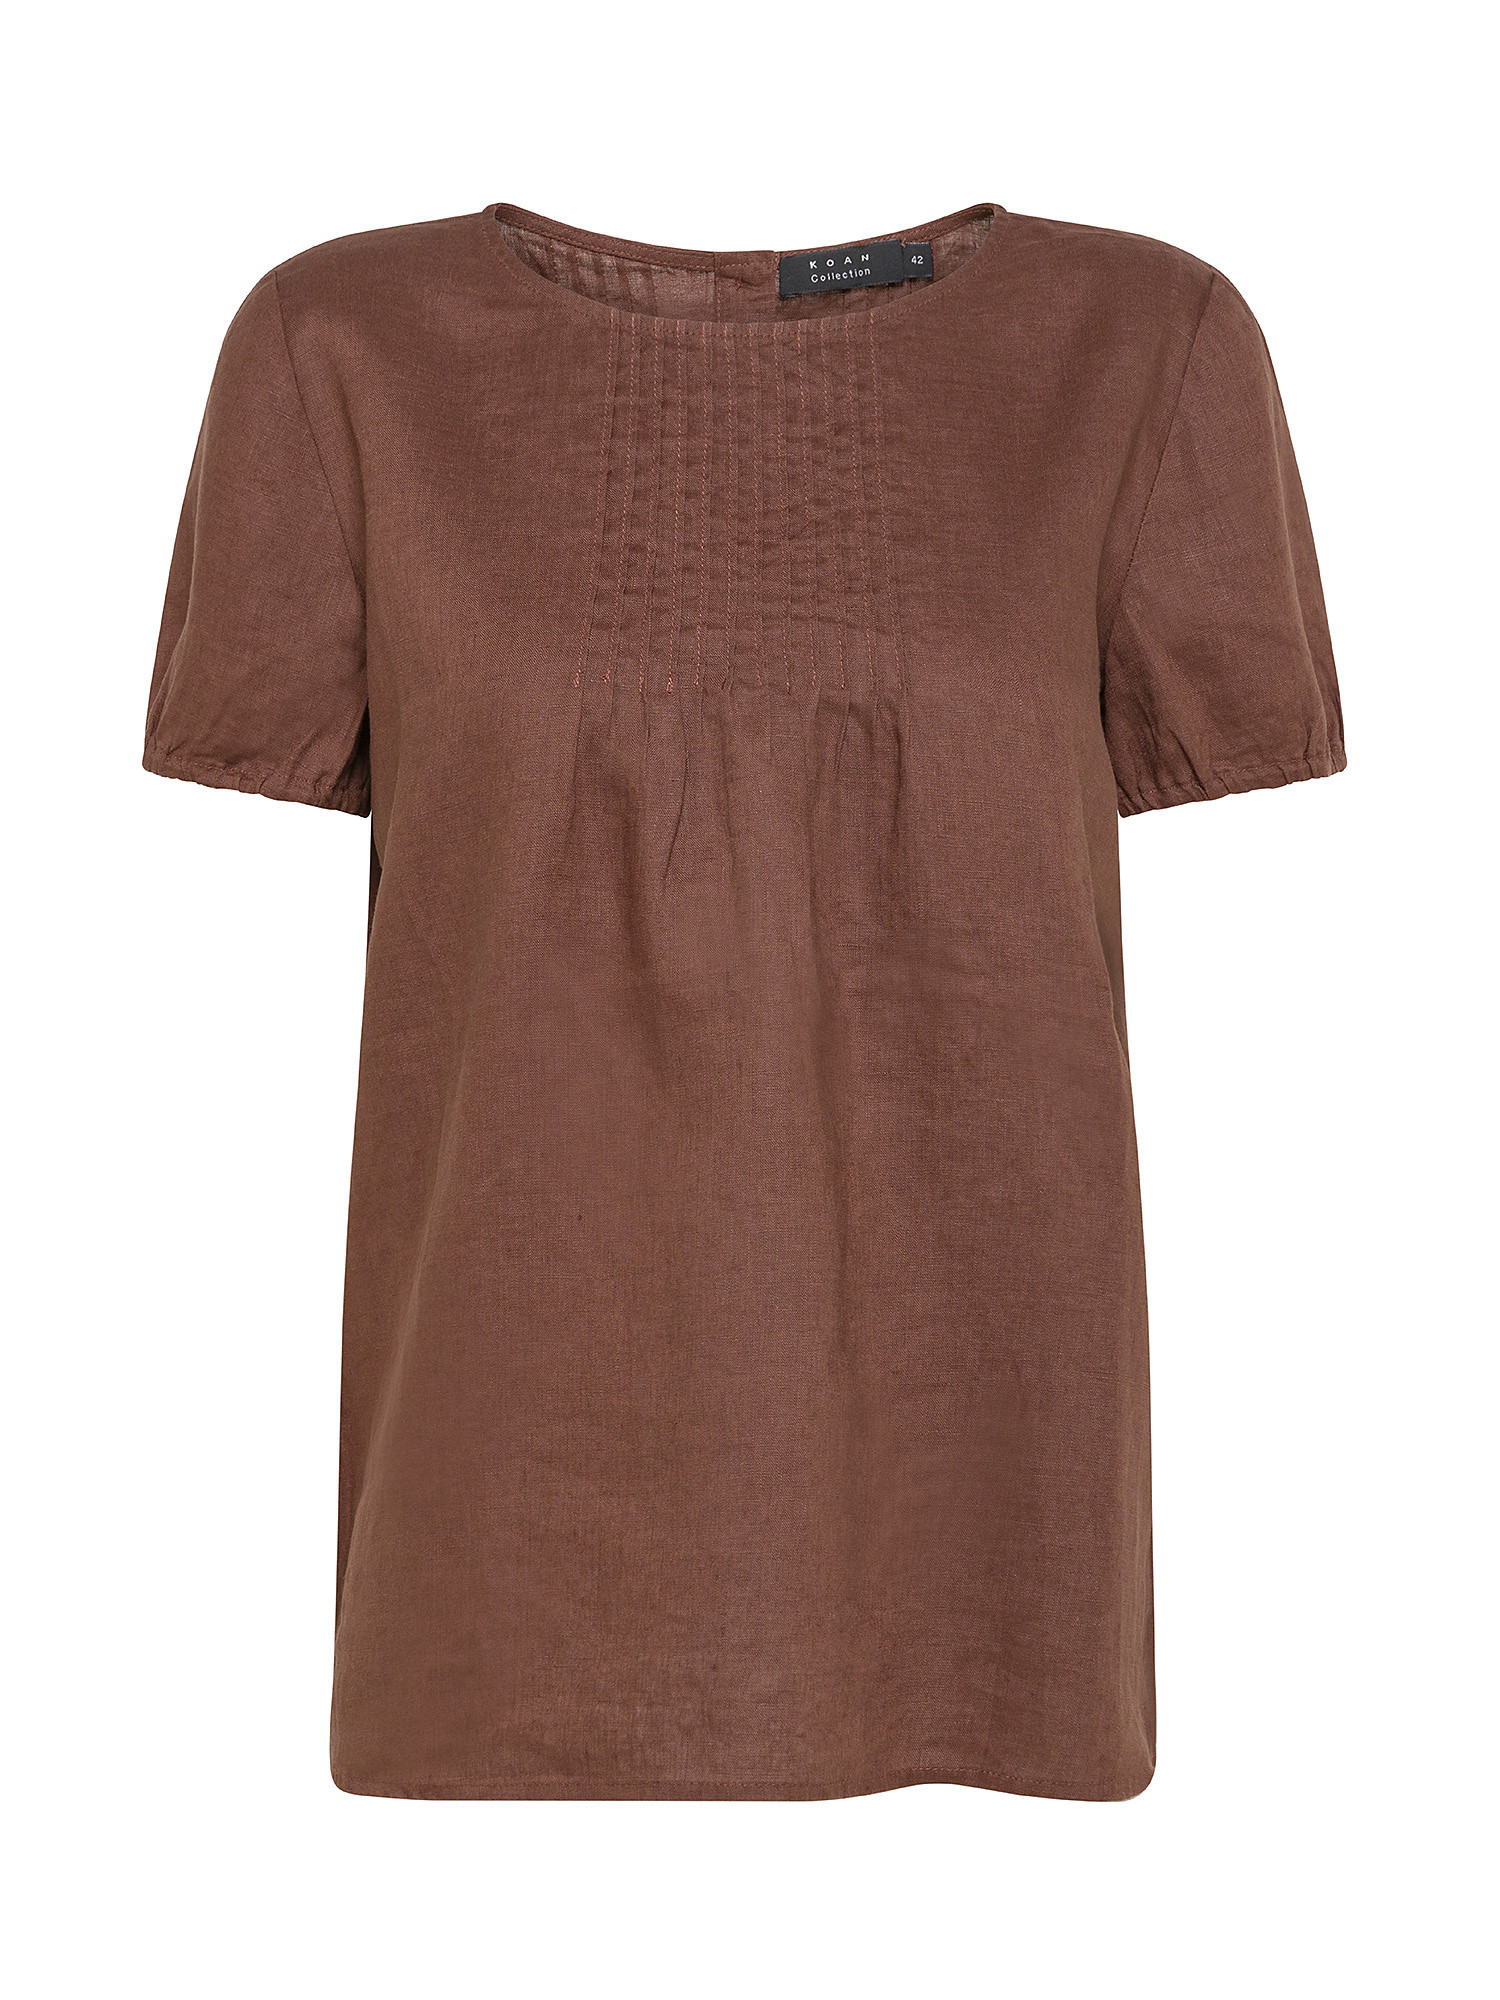 Koan - Linen blouse, Brown, large image number 0